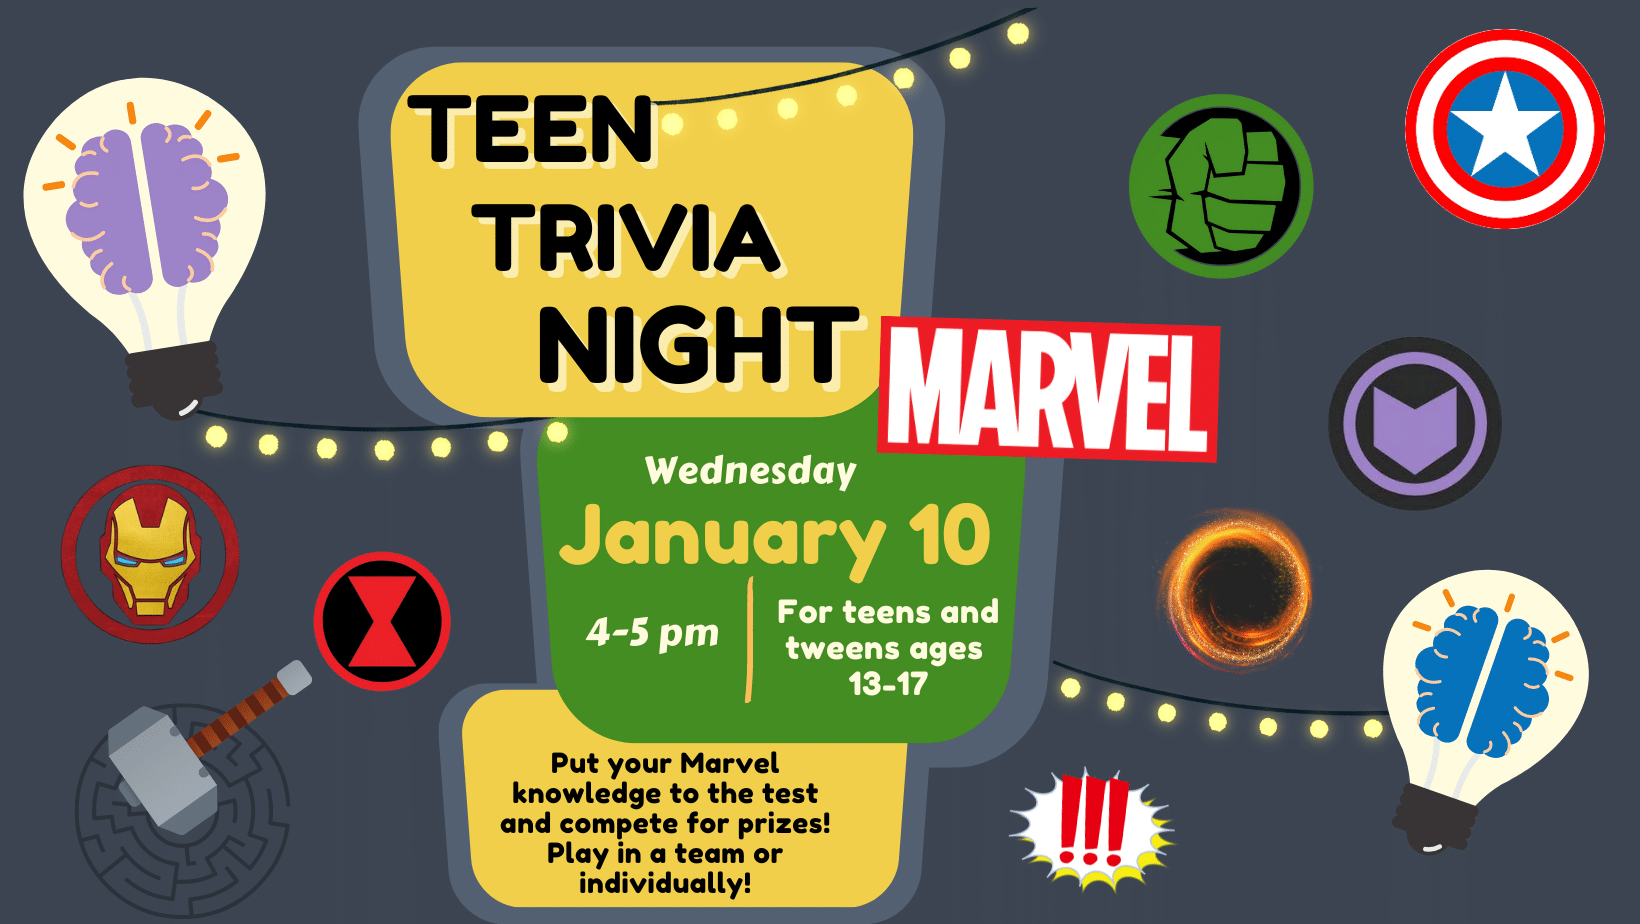 Teen Trivia Night: Marvel, Wednesday, January 10 at 4:00 pm